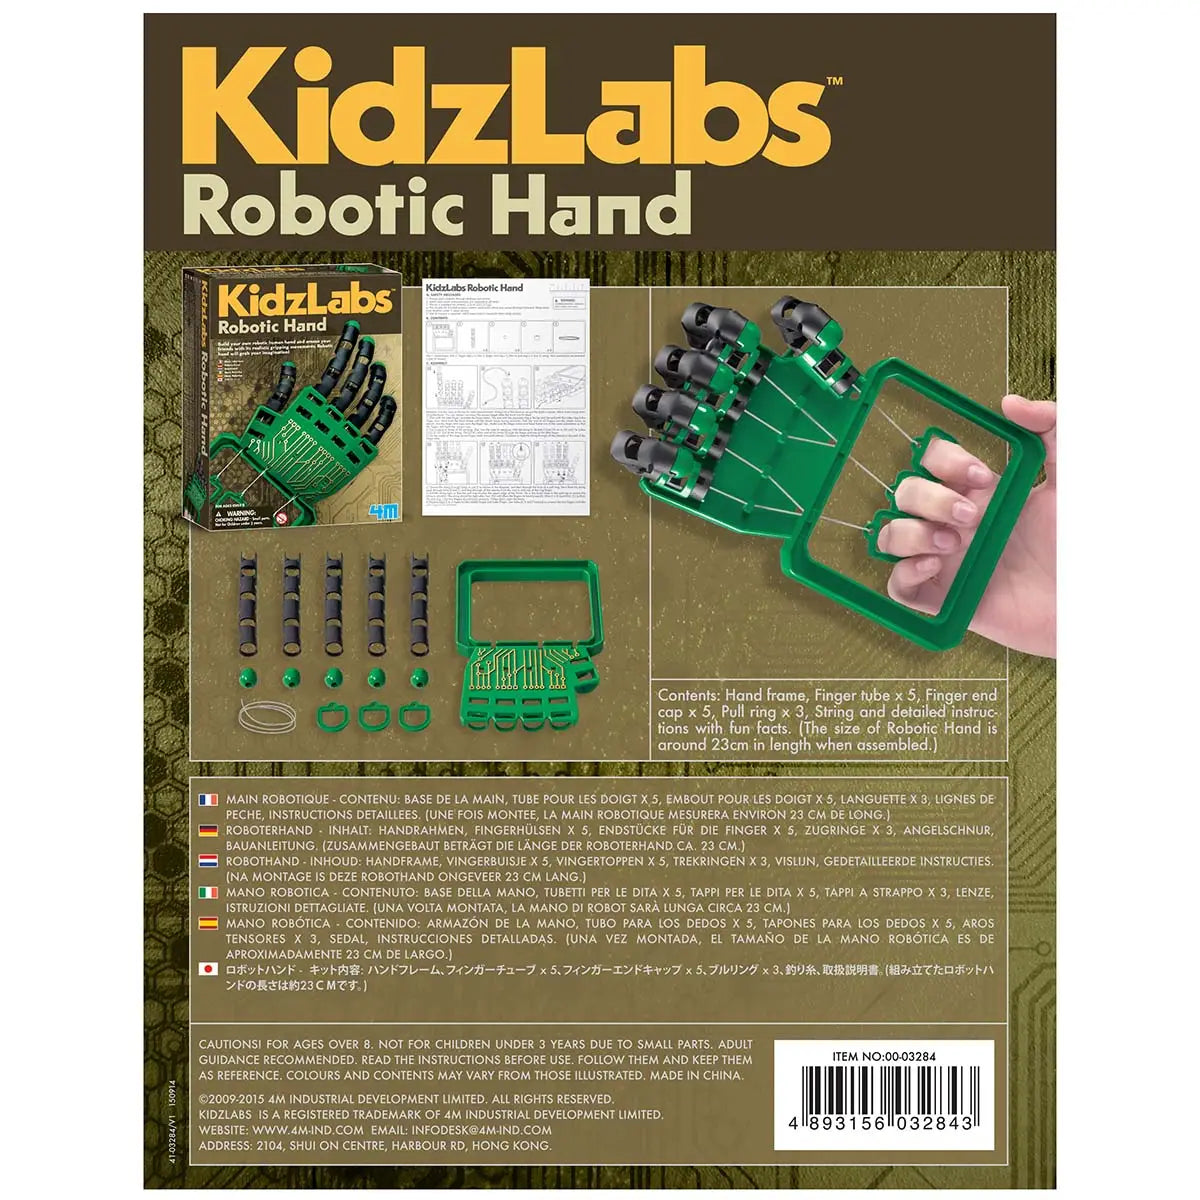 9" Robotic Hand Stem Science Diy Kit